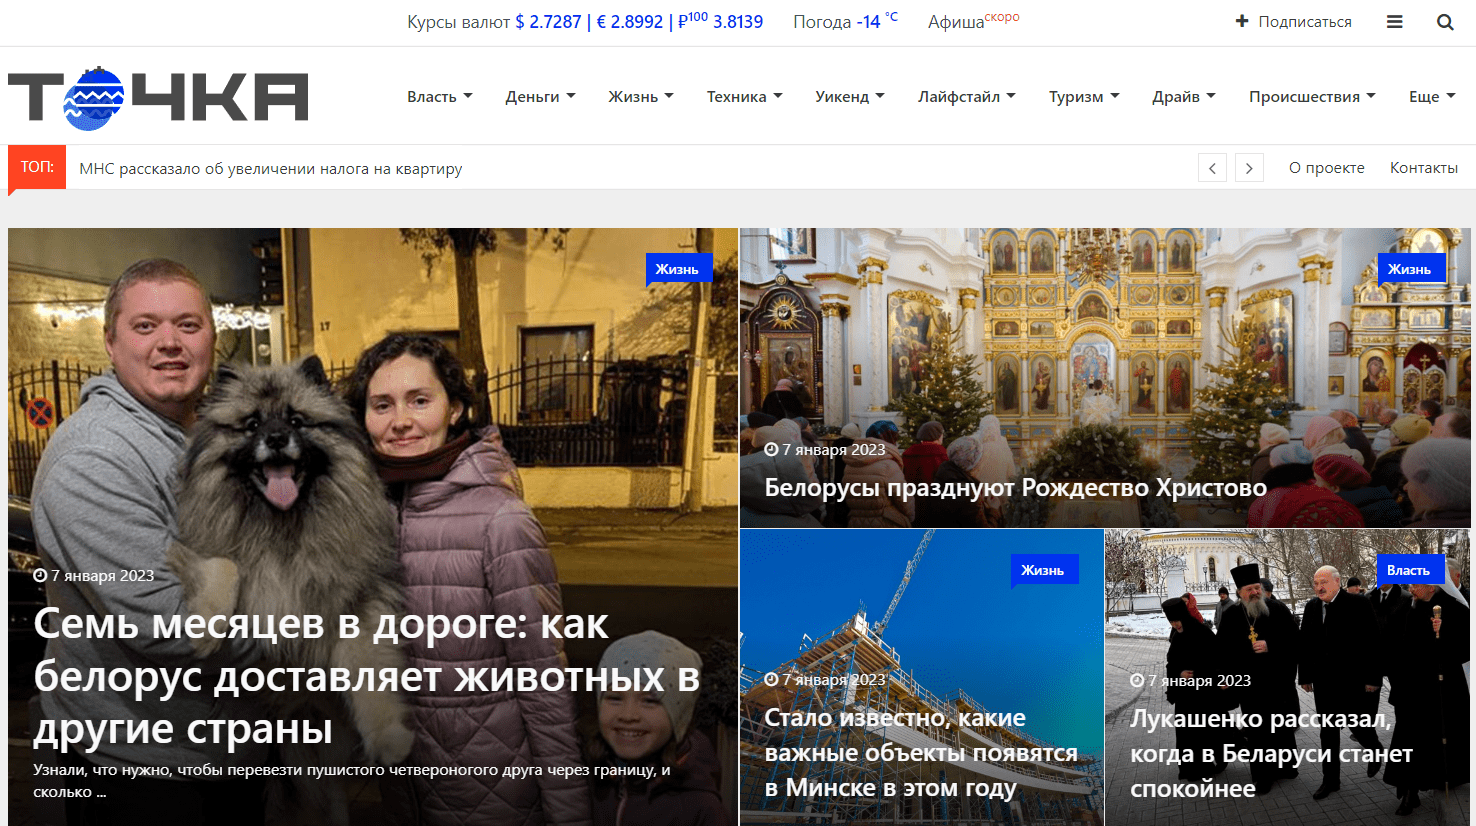 Точка бай (tochka.by) – официальный сайт